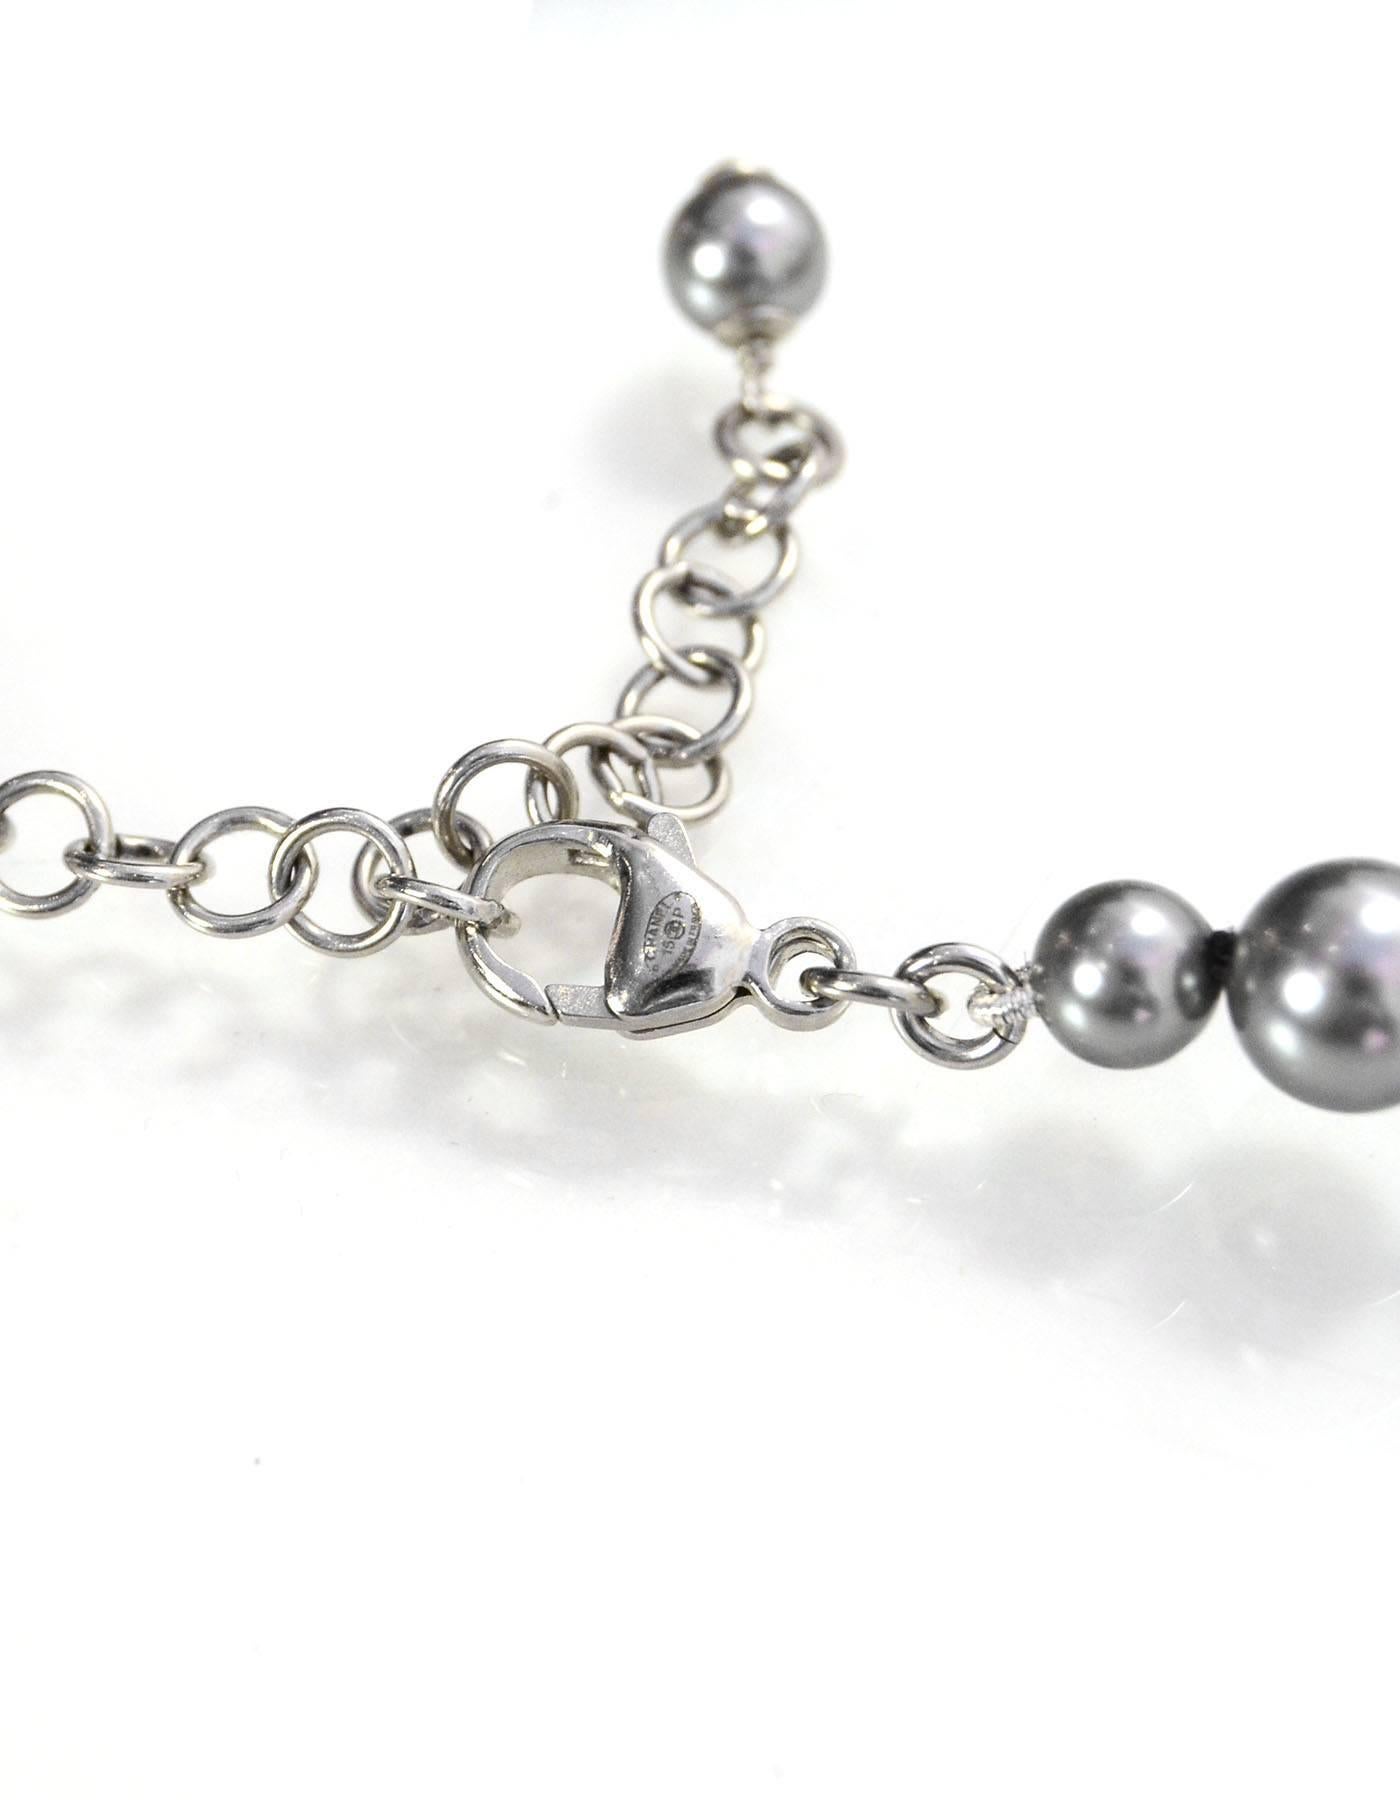 chanel grey pearl necklace